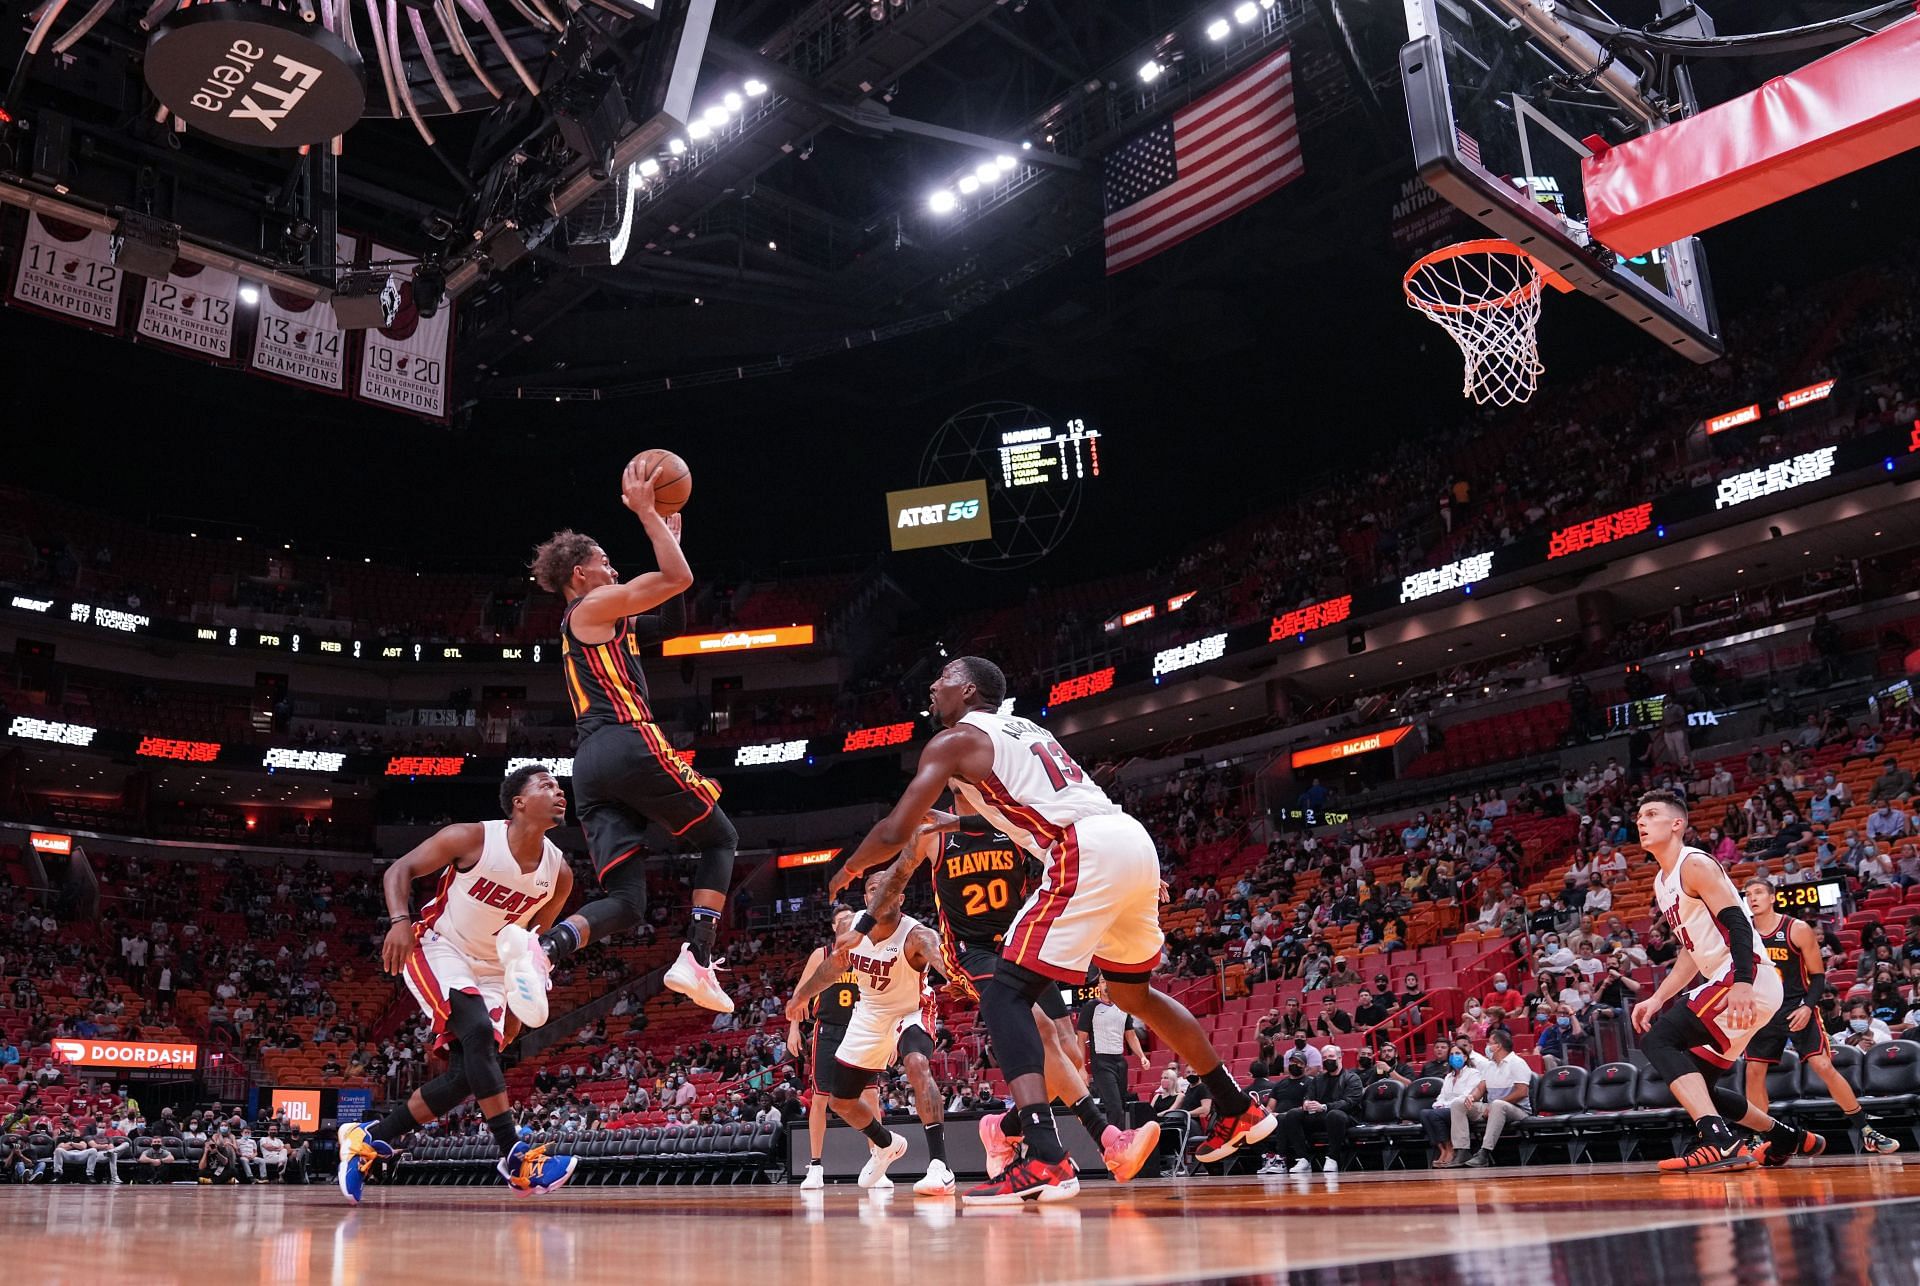 The Atlanta Hawks will host the Miami Heat in a preseason game on Oct. 14th